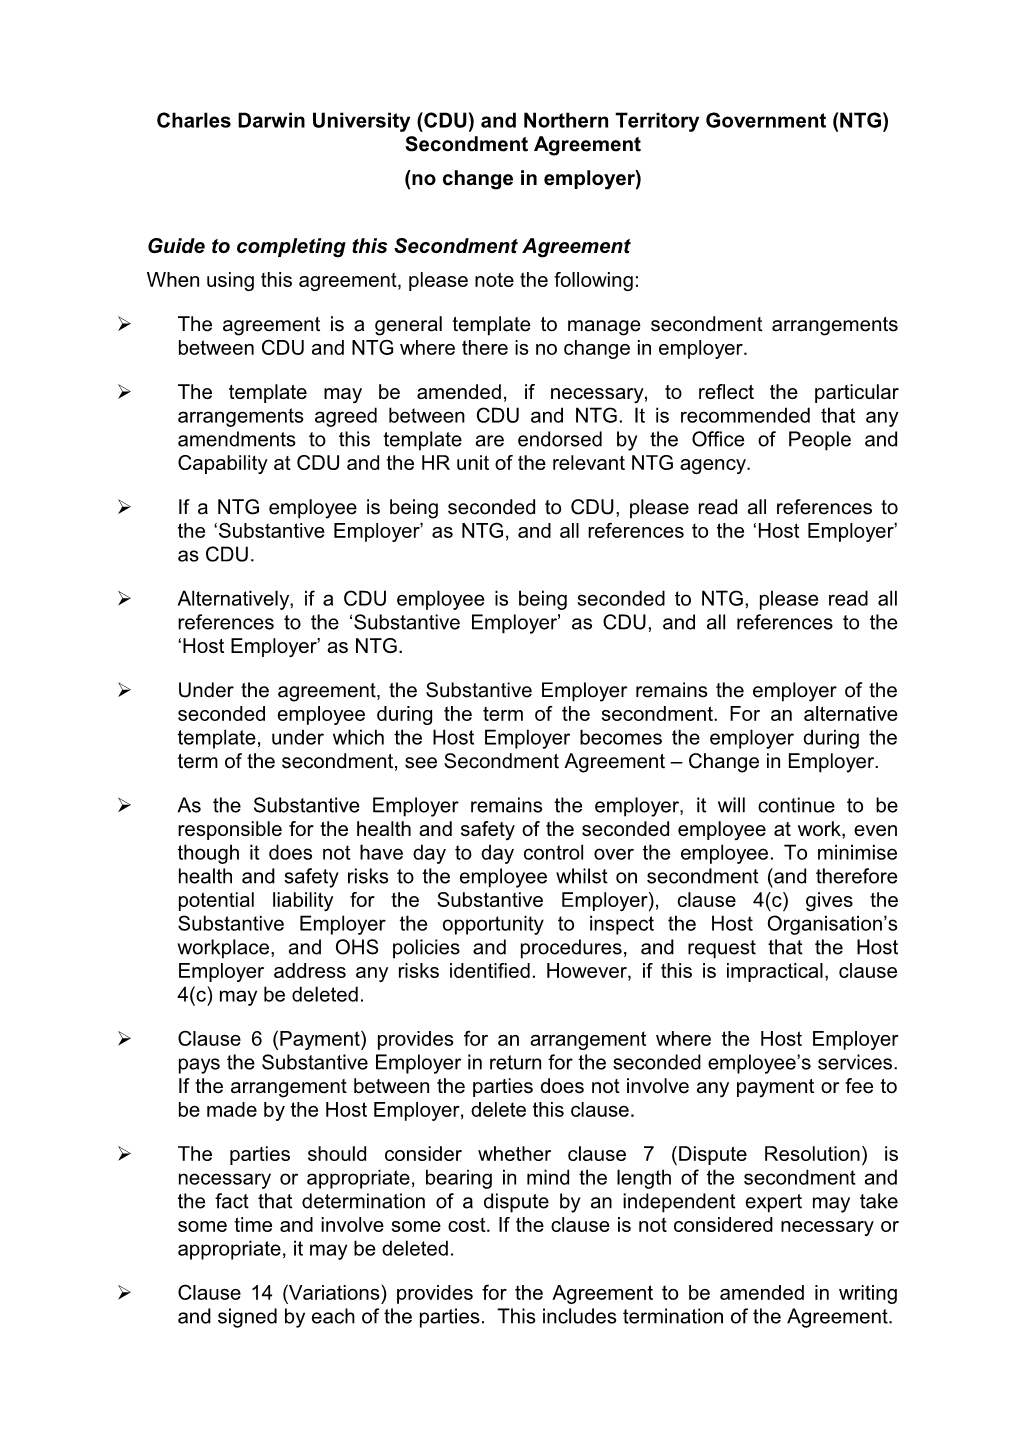 Charles Darwin University (CDU) and Northern Territory Government (NTG) Secondment Agreement